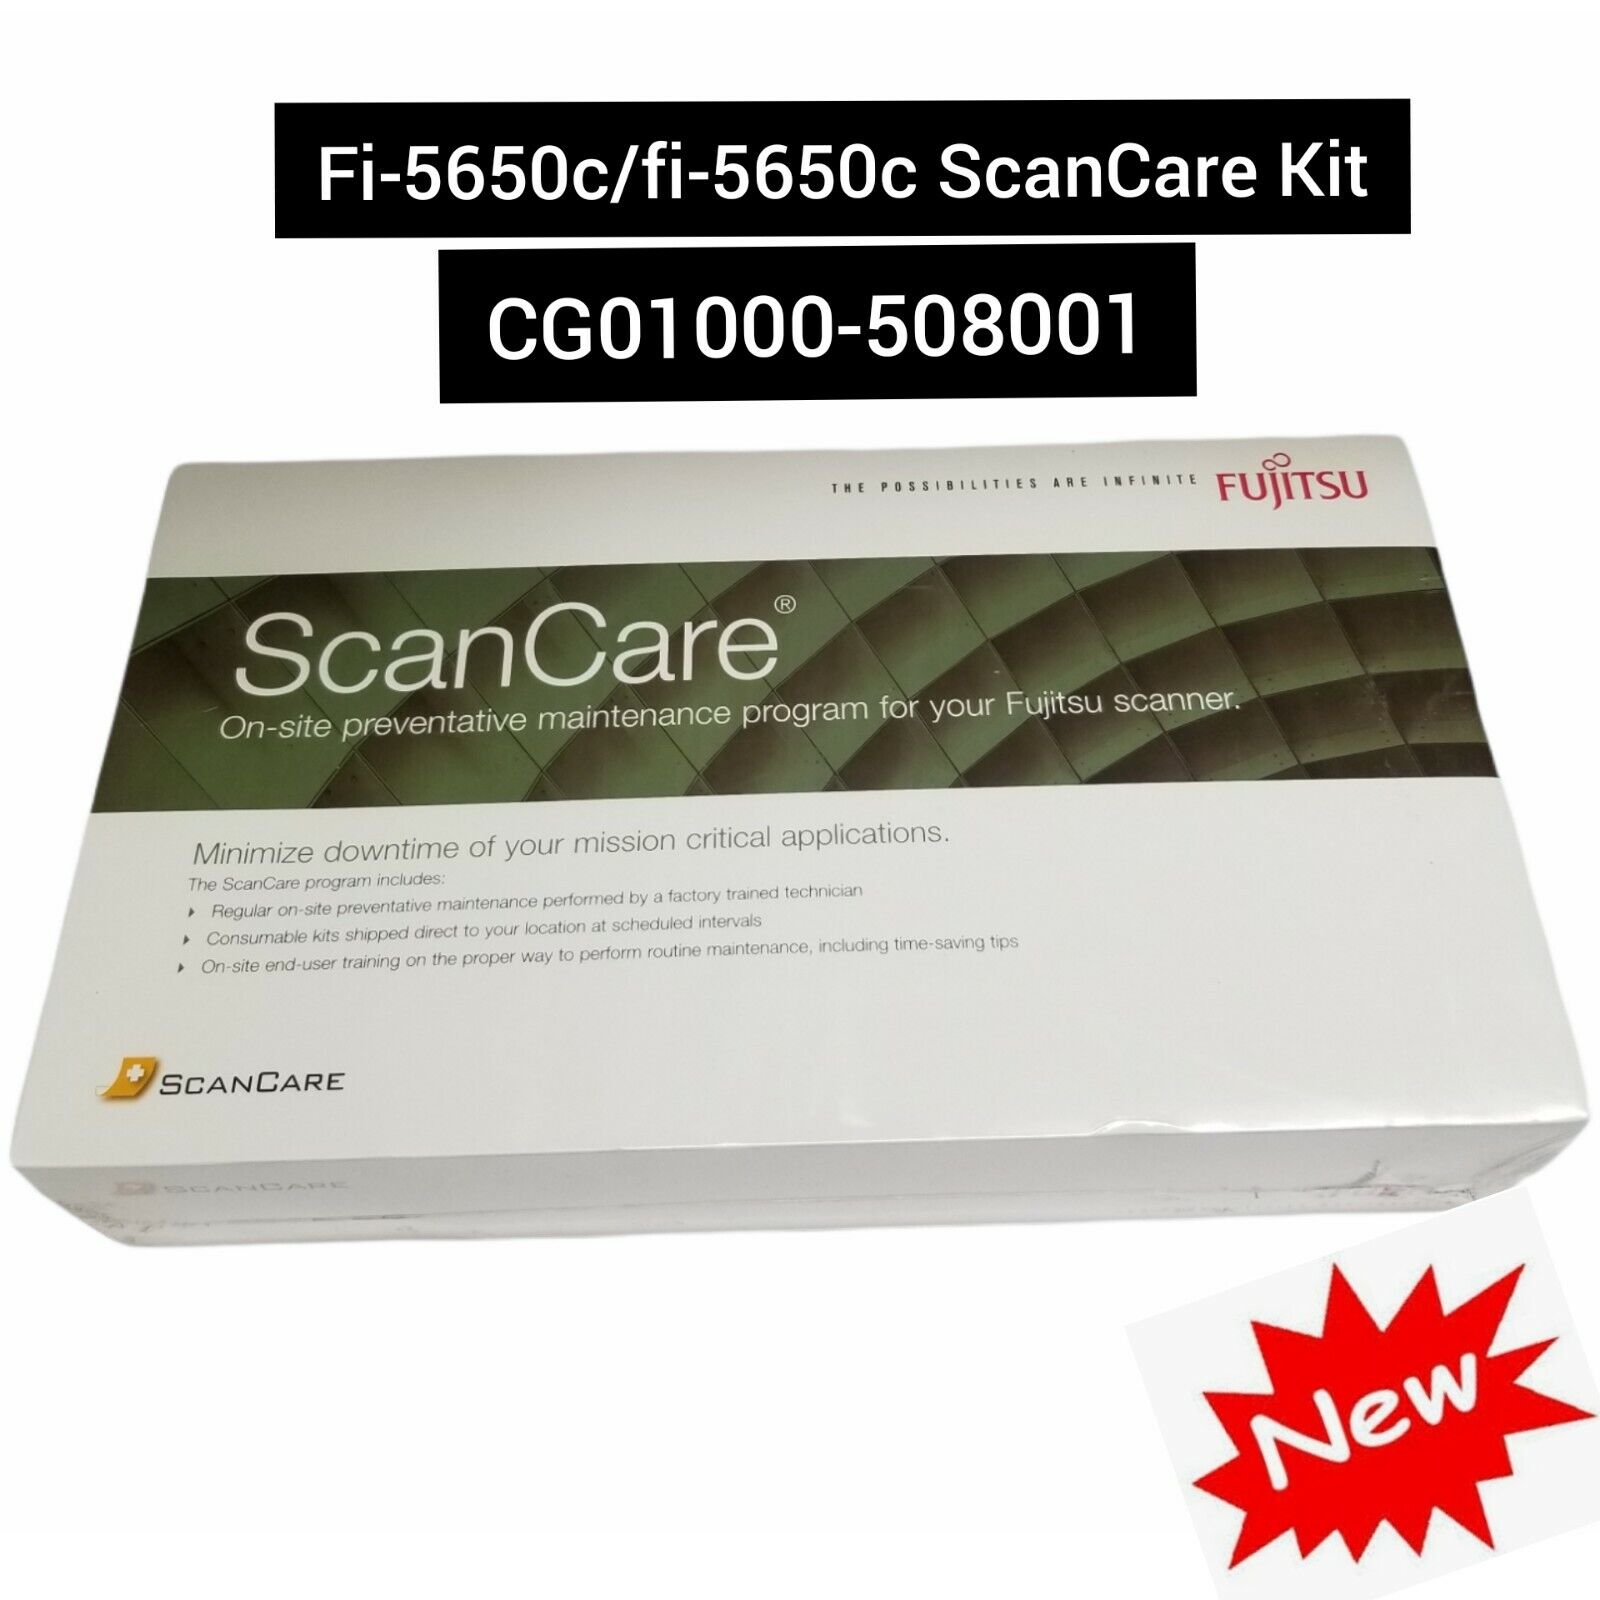 Brand New Fujitsu ScanCare Kit Series (CG01000-508001) for fi-5650c/fi-5750c 